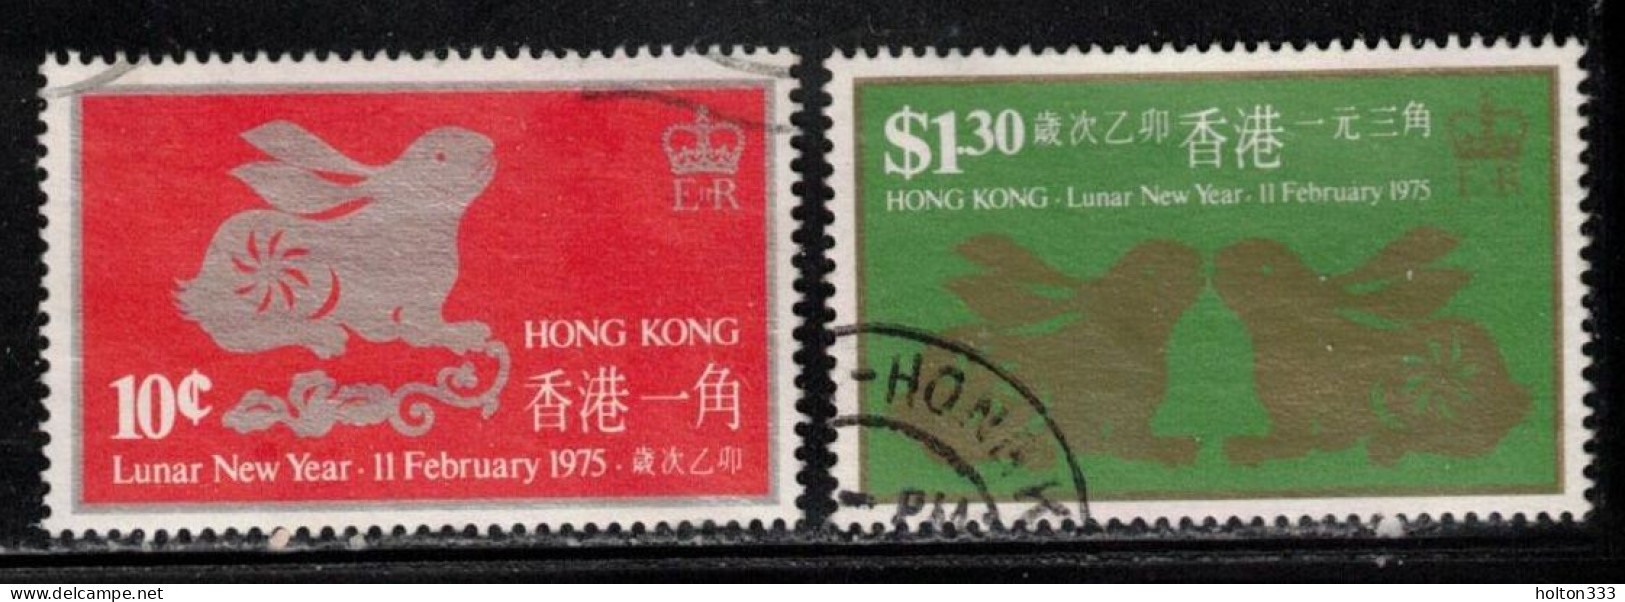 HONG KONG Scott # 302-3 Used - Lunar New Year 1975 - Usati